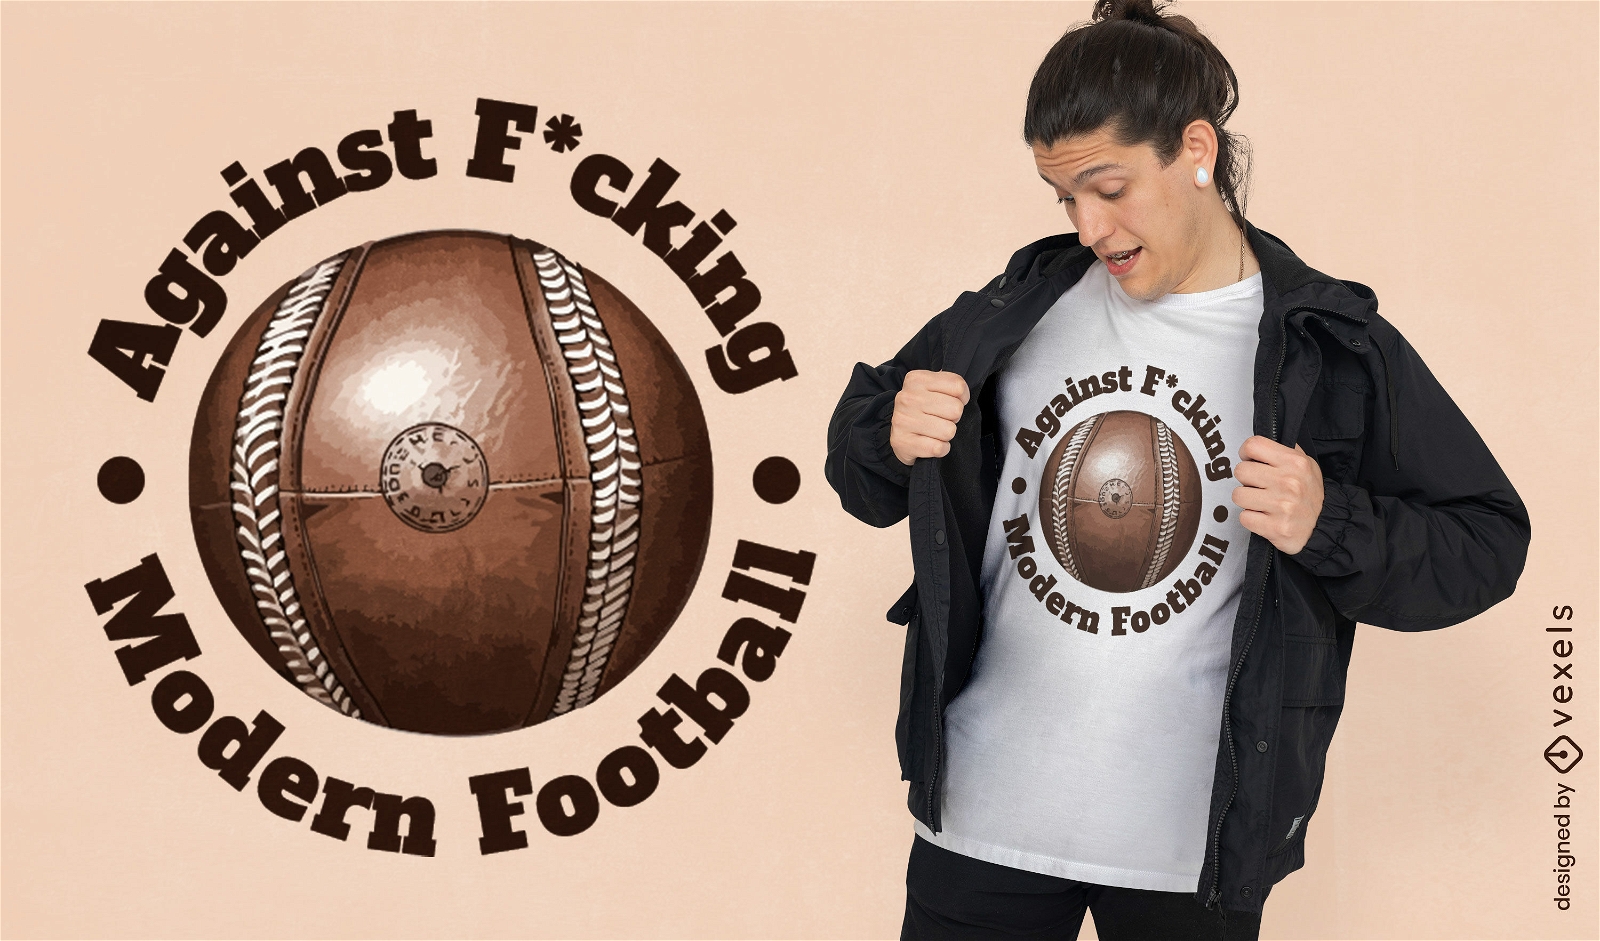 Diseño moderno de camiseta deportiva de fútbol.